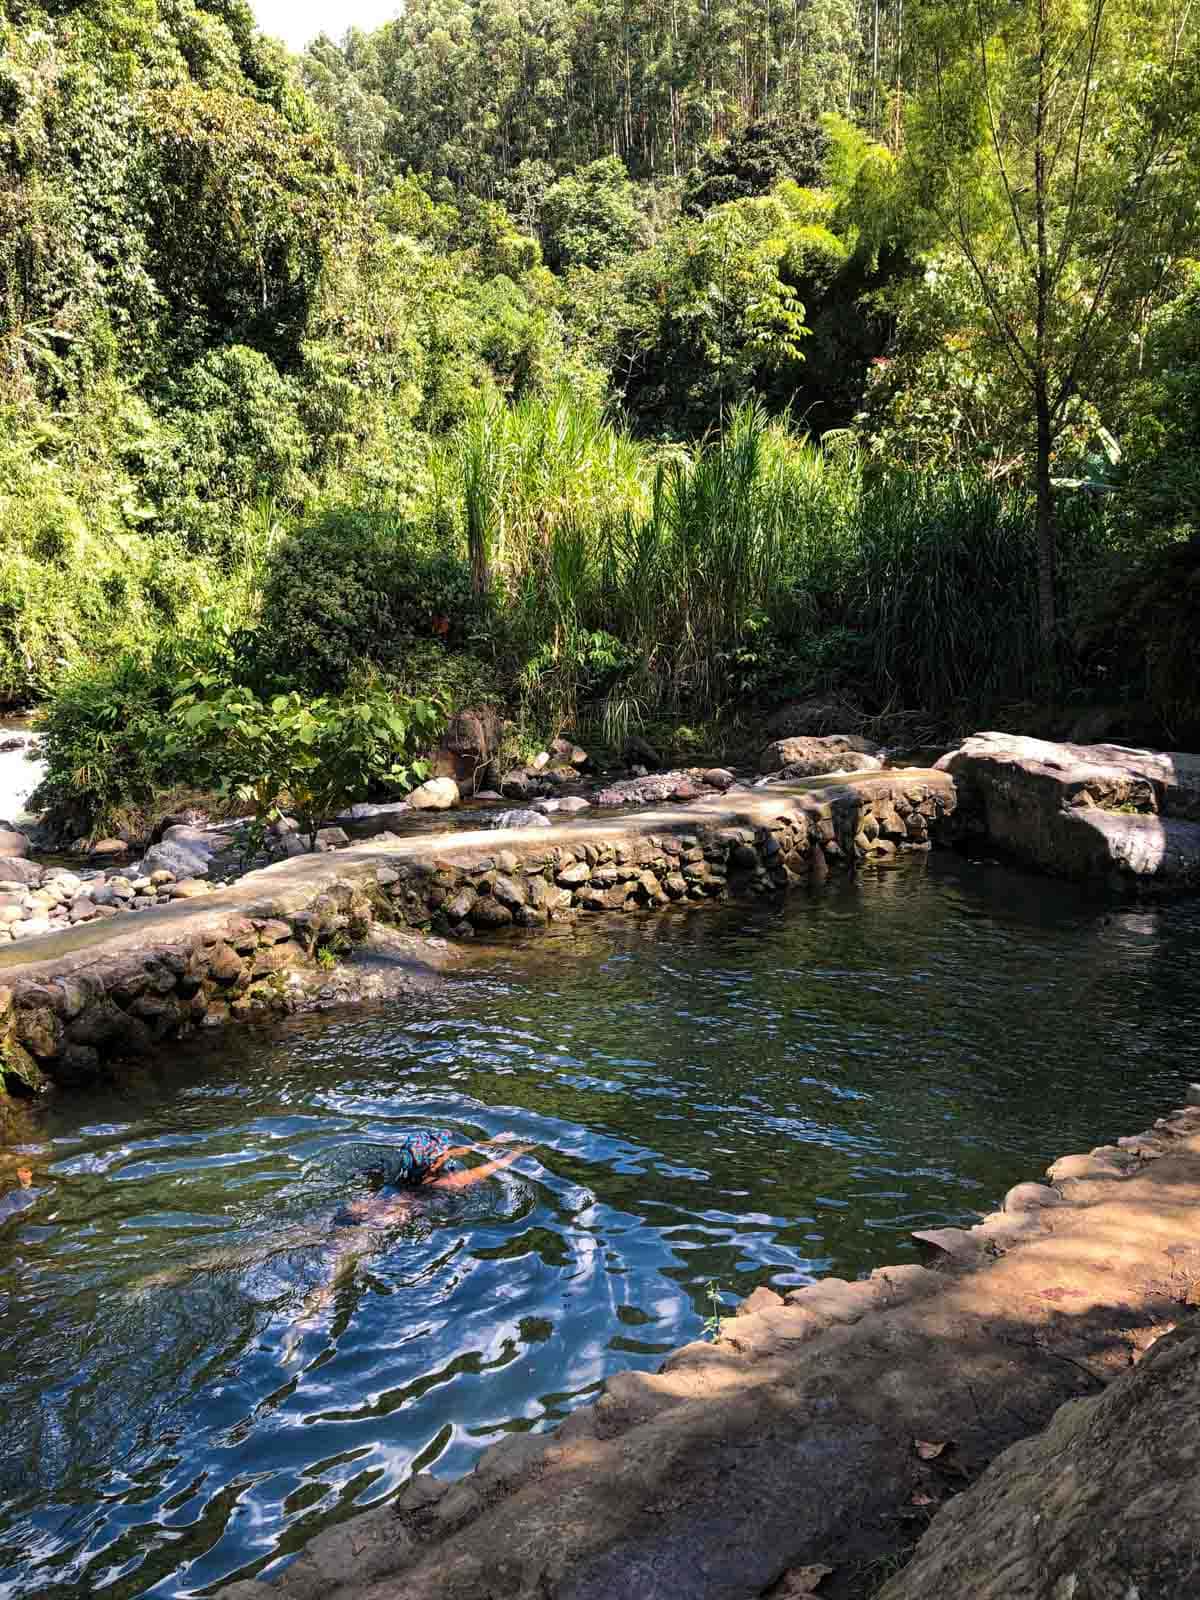 Locals swimming in Jardin, Colombia.